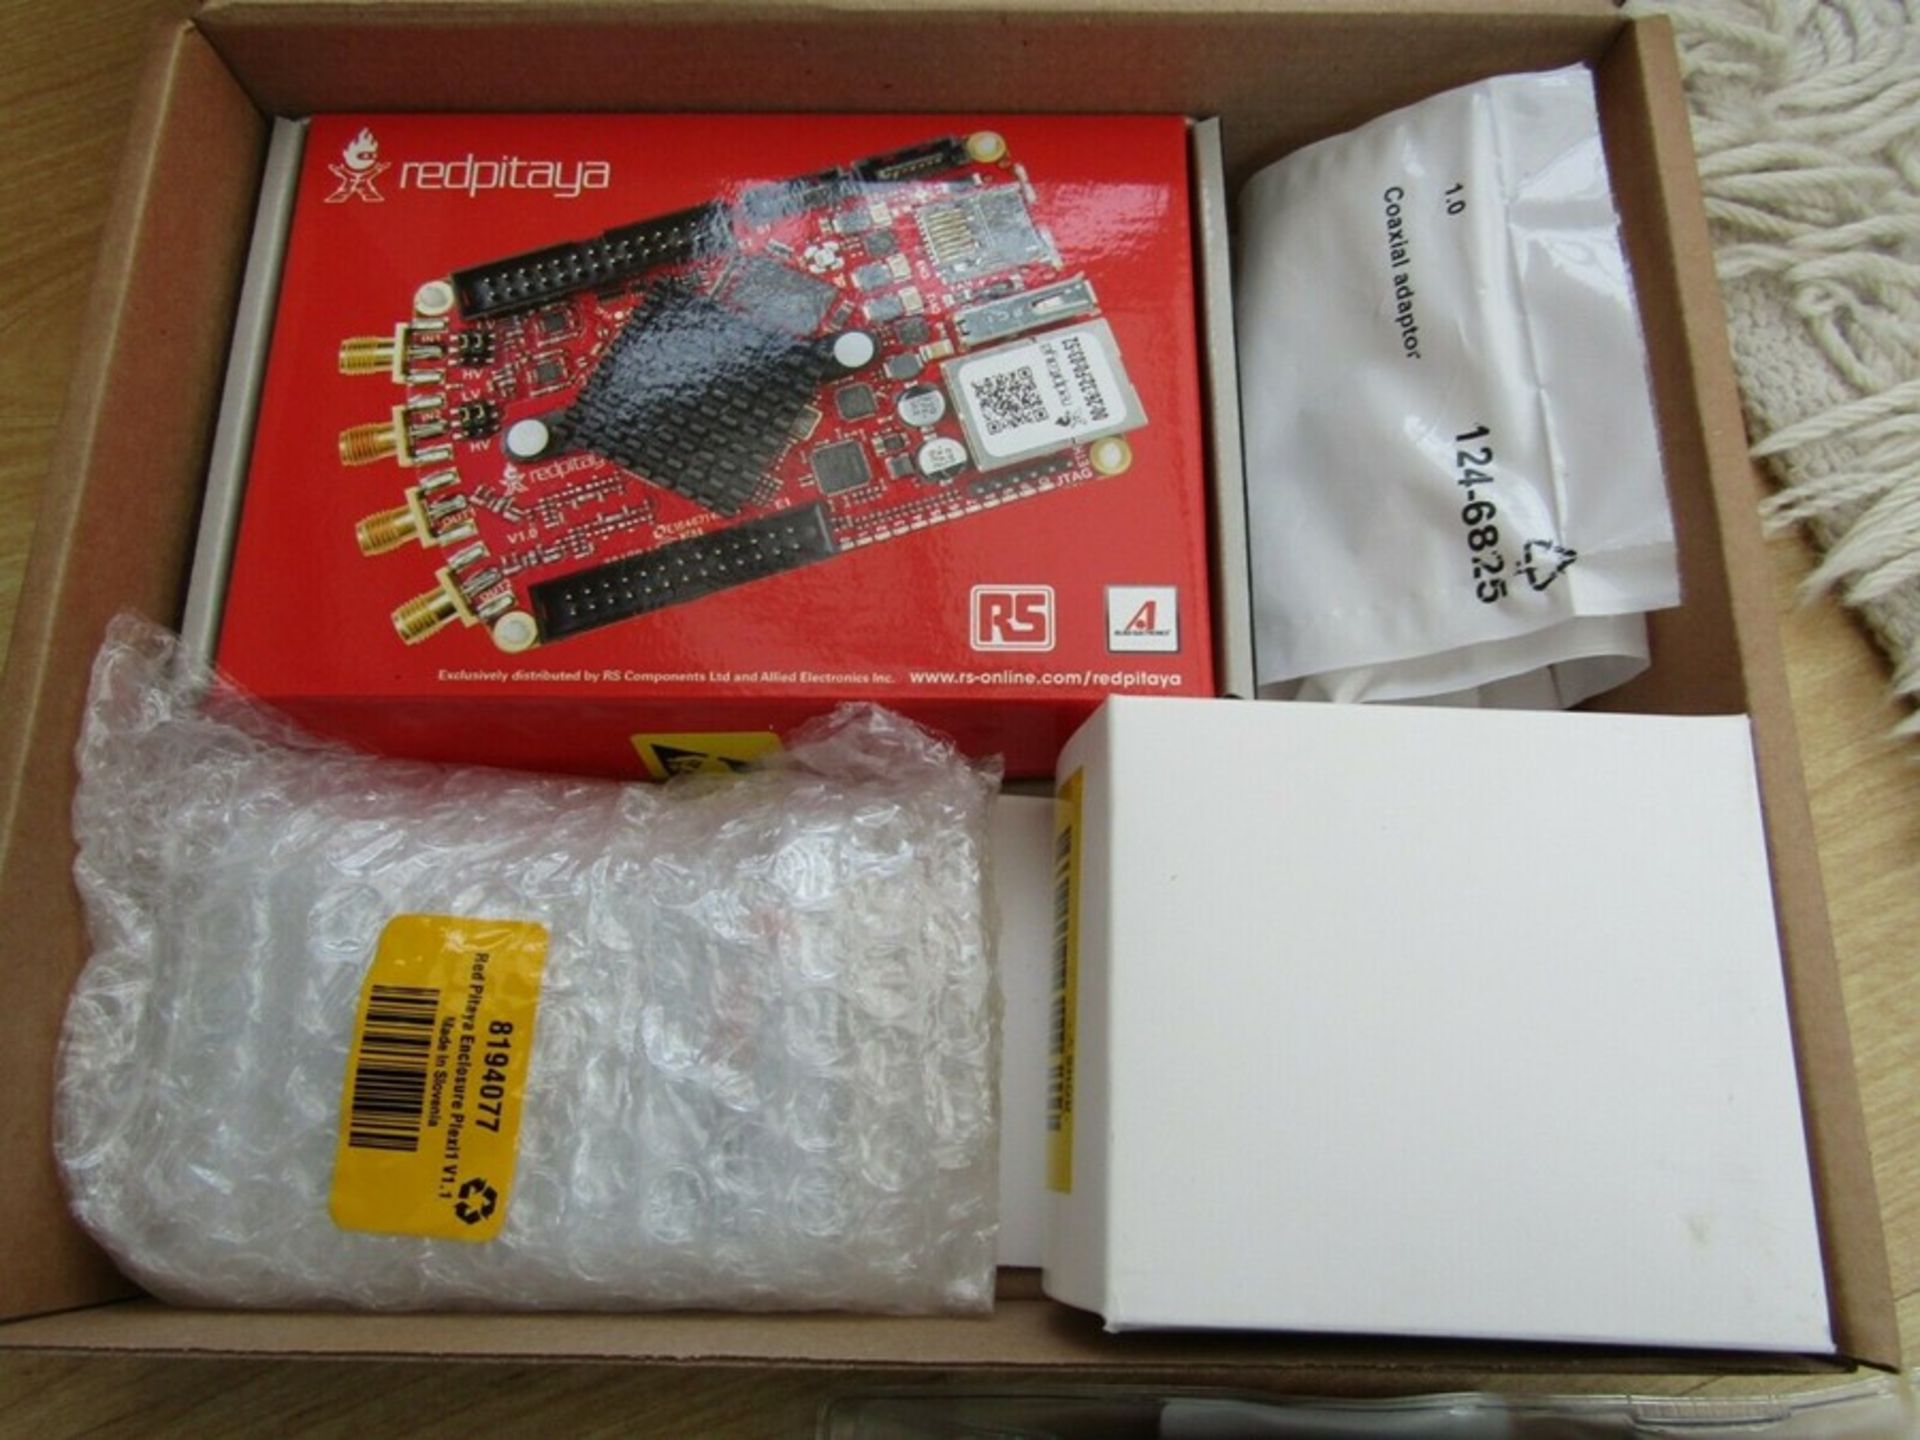 Red Pitaya V1.1 Diagnostic Kit - PC Oscilloscope, USB, 2 Channels, 50MHz - RS 8272755